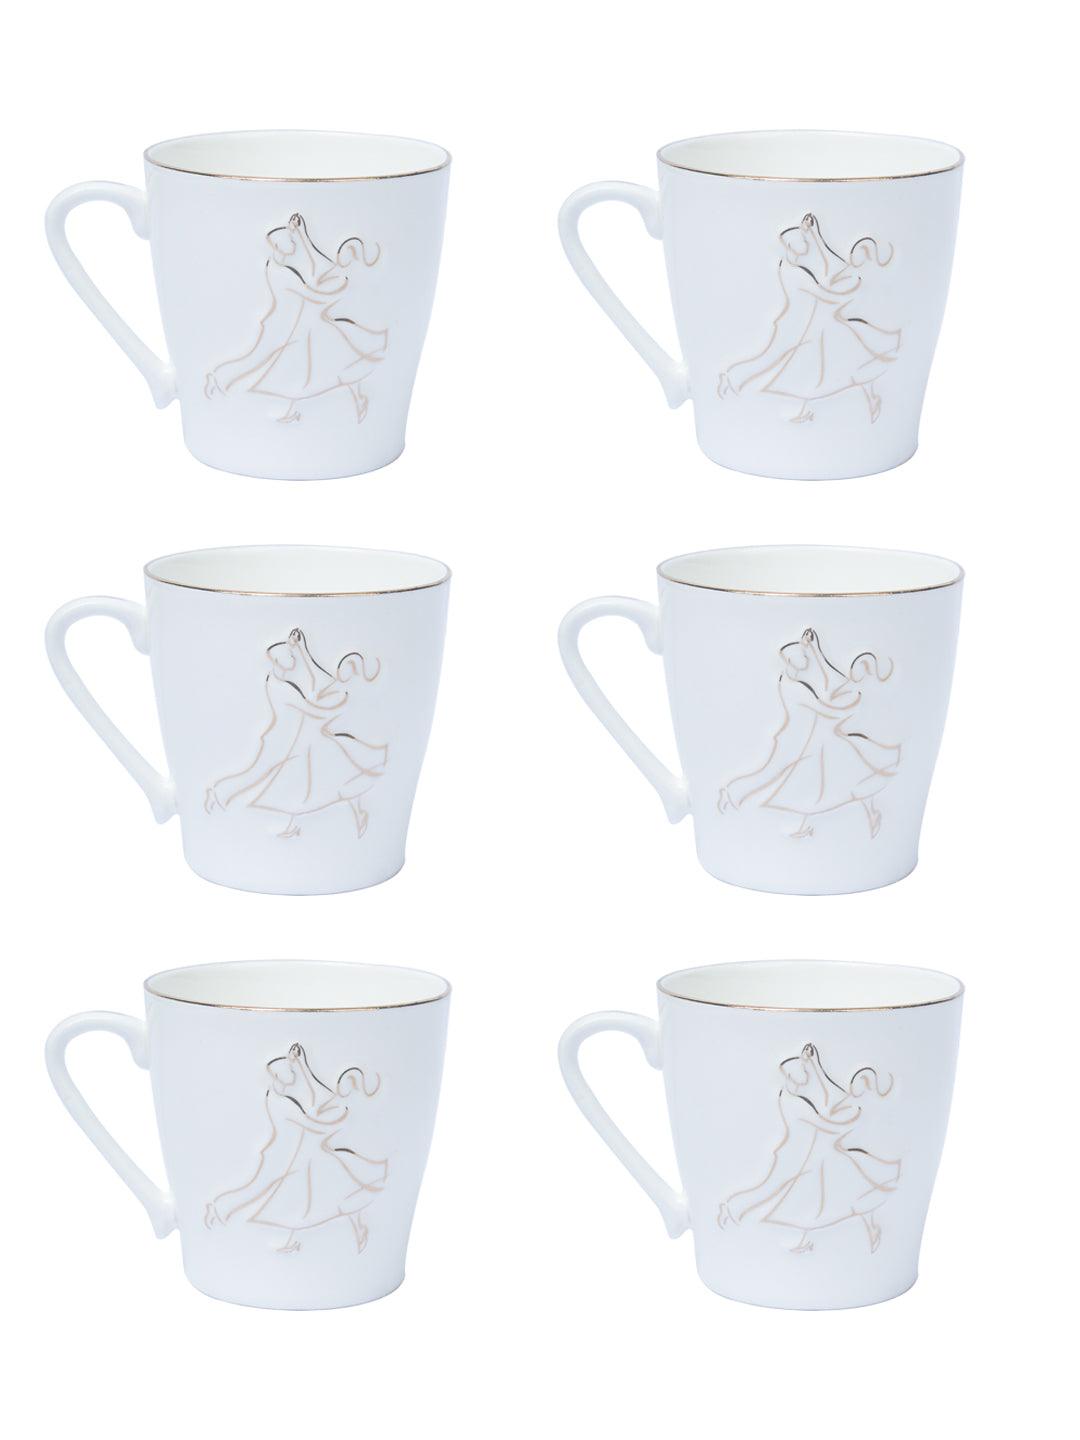 GOLDEN RING + VIENNESE WALTZ DANCER' Print Ceramic Tea & Coffee Mugs (Set Of 6, Each 200mL) - MARKET 99